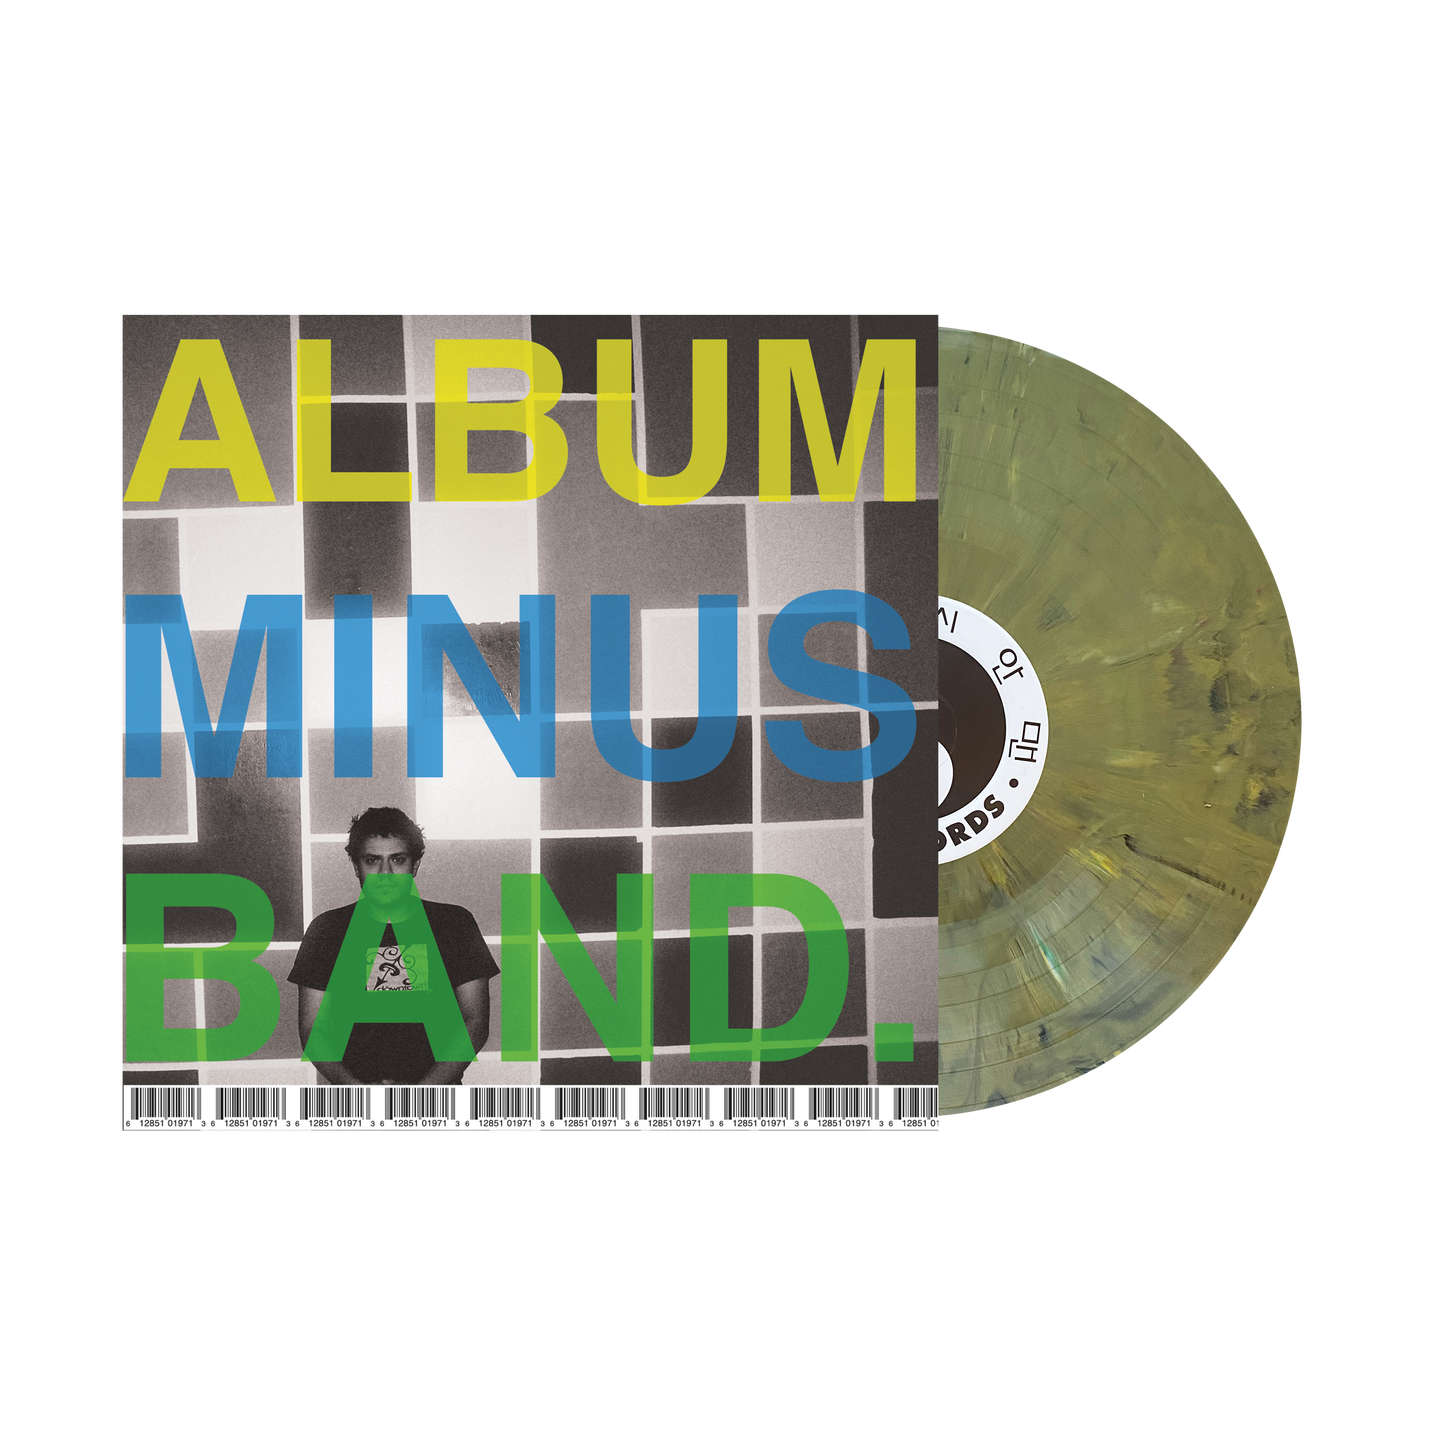 Bomb The Music Industry! "Album Minus Band" LP